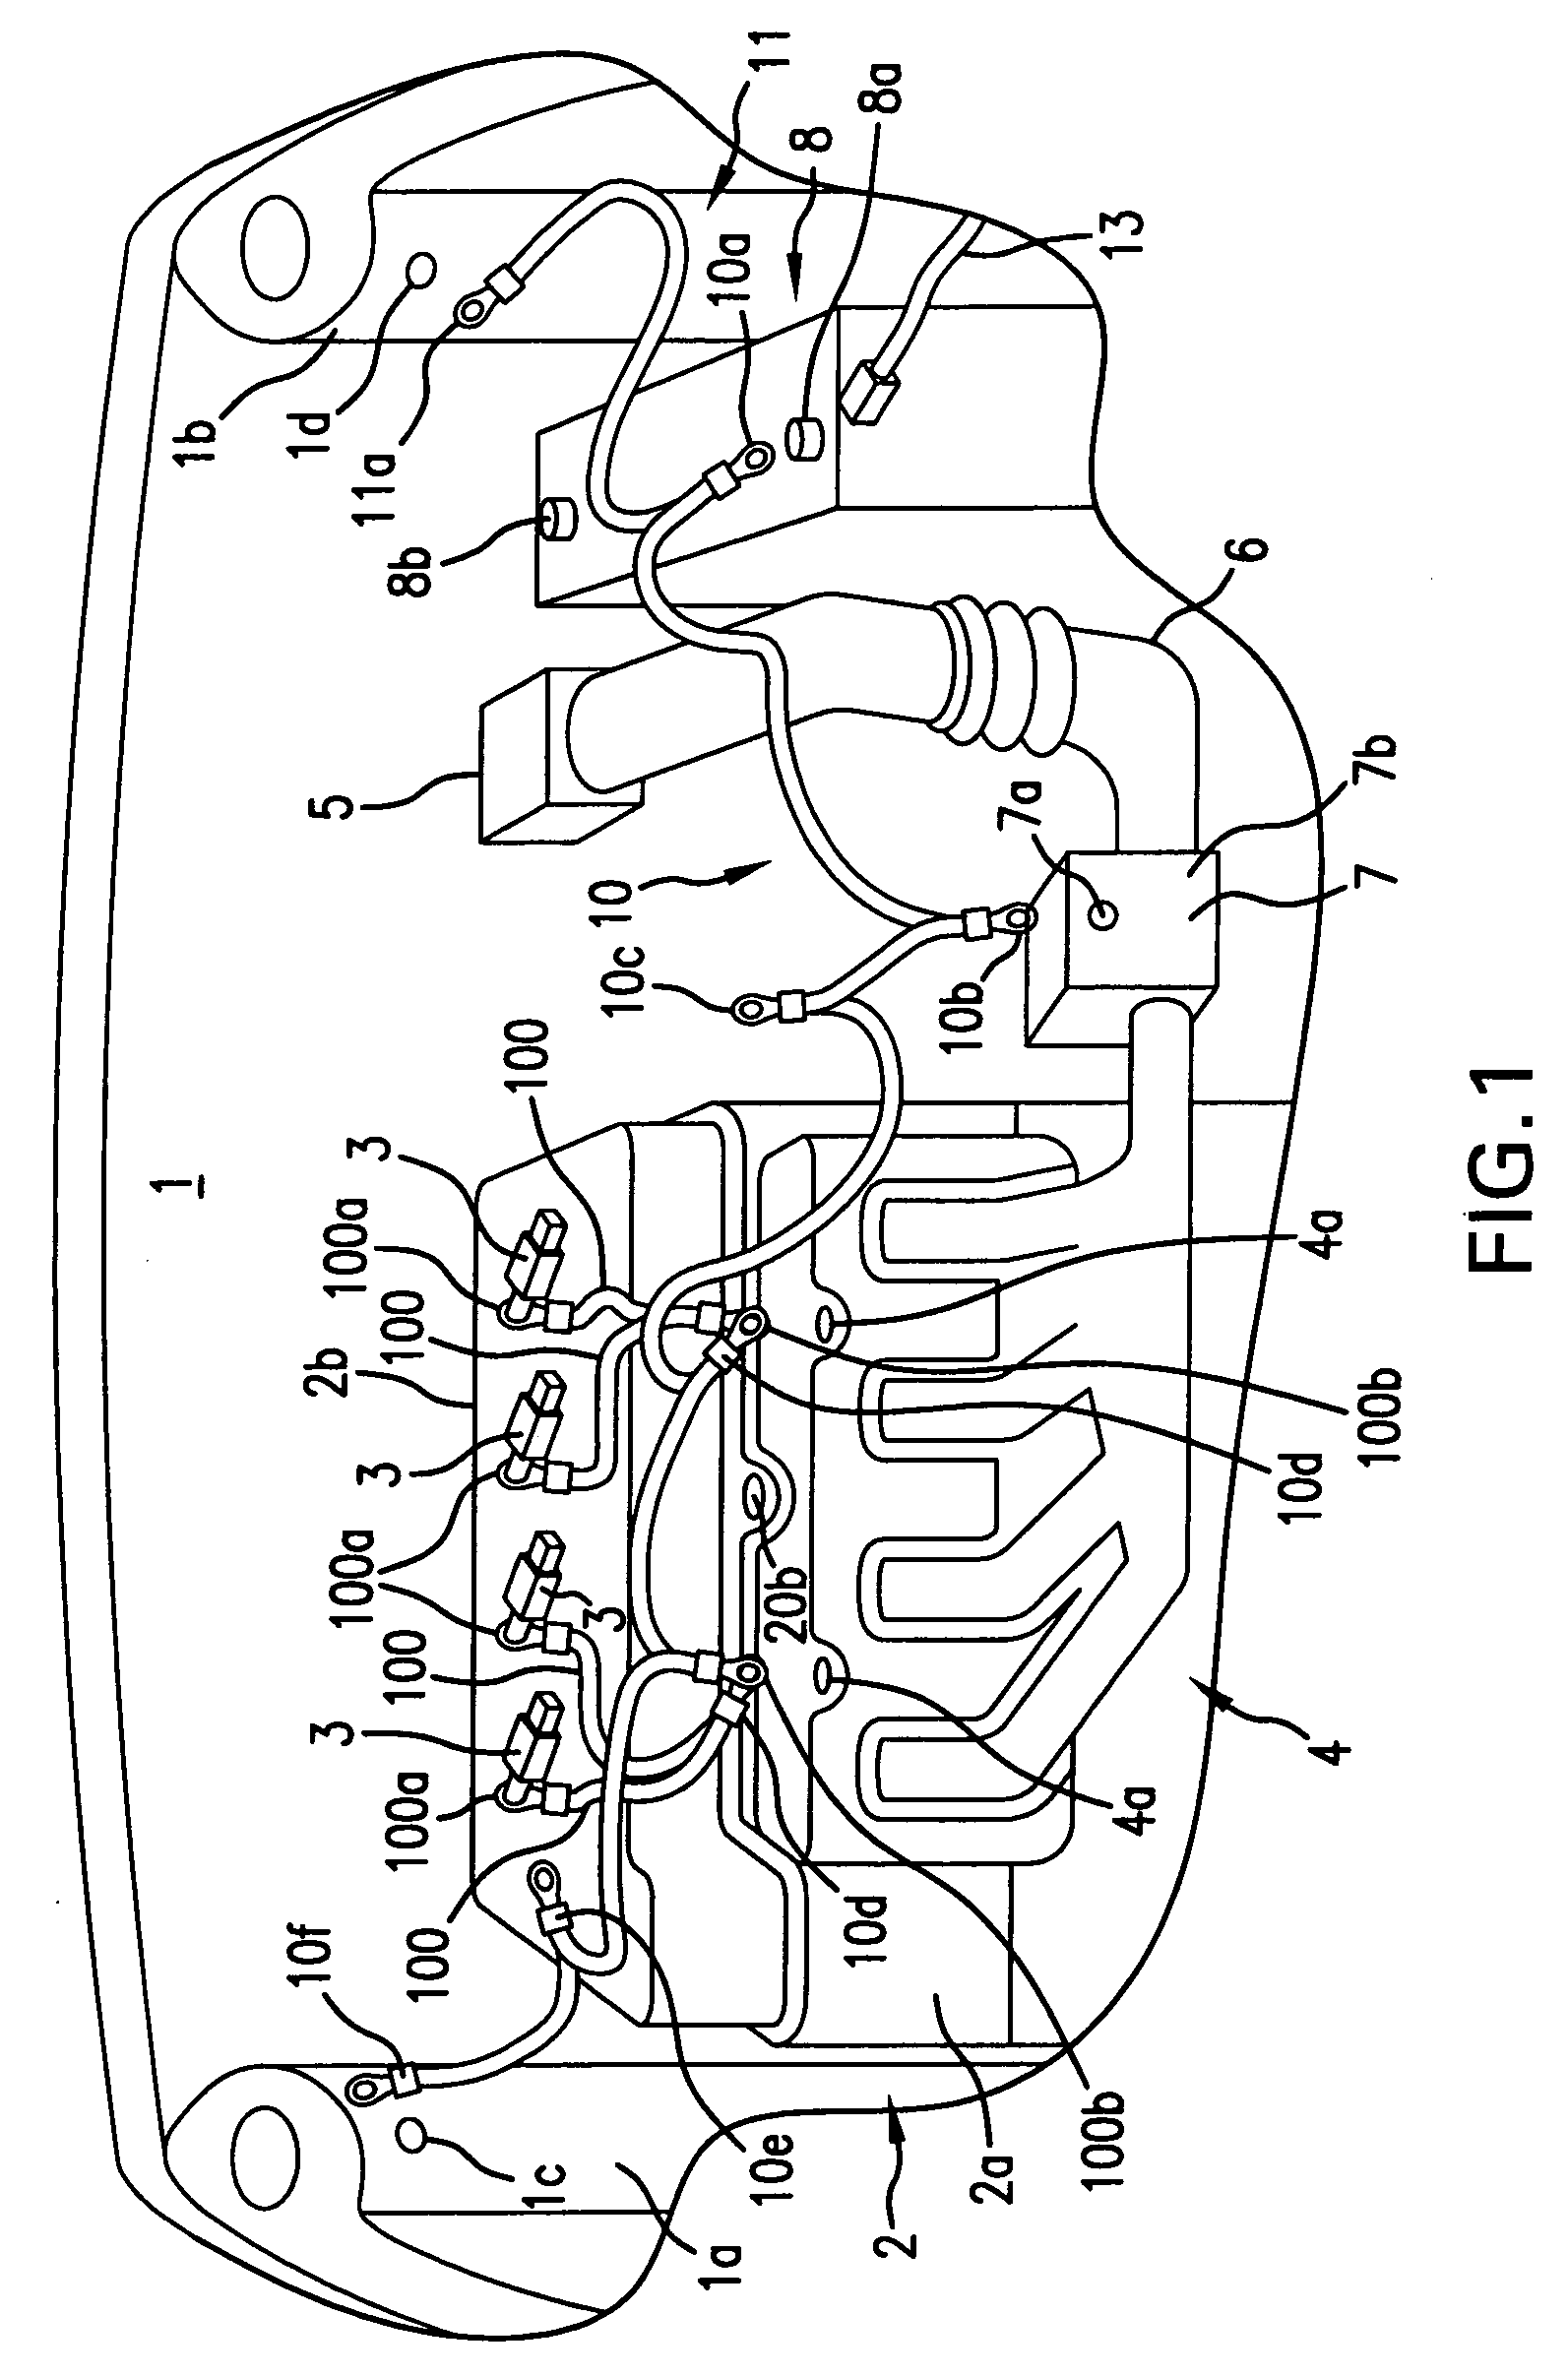 Engine ground system